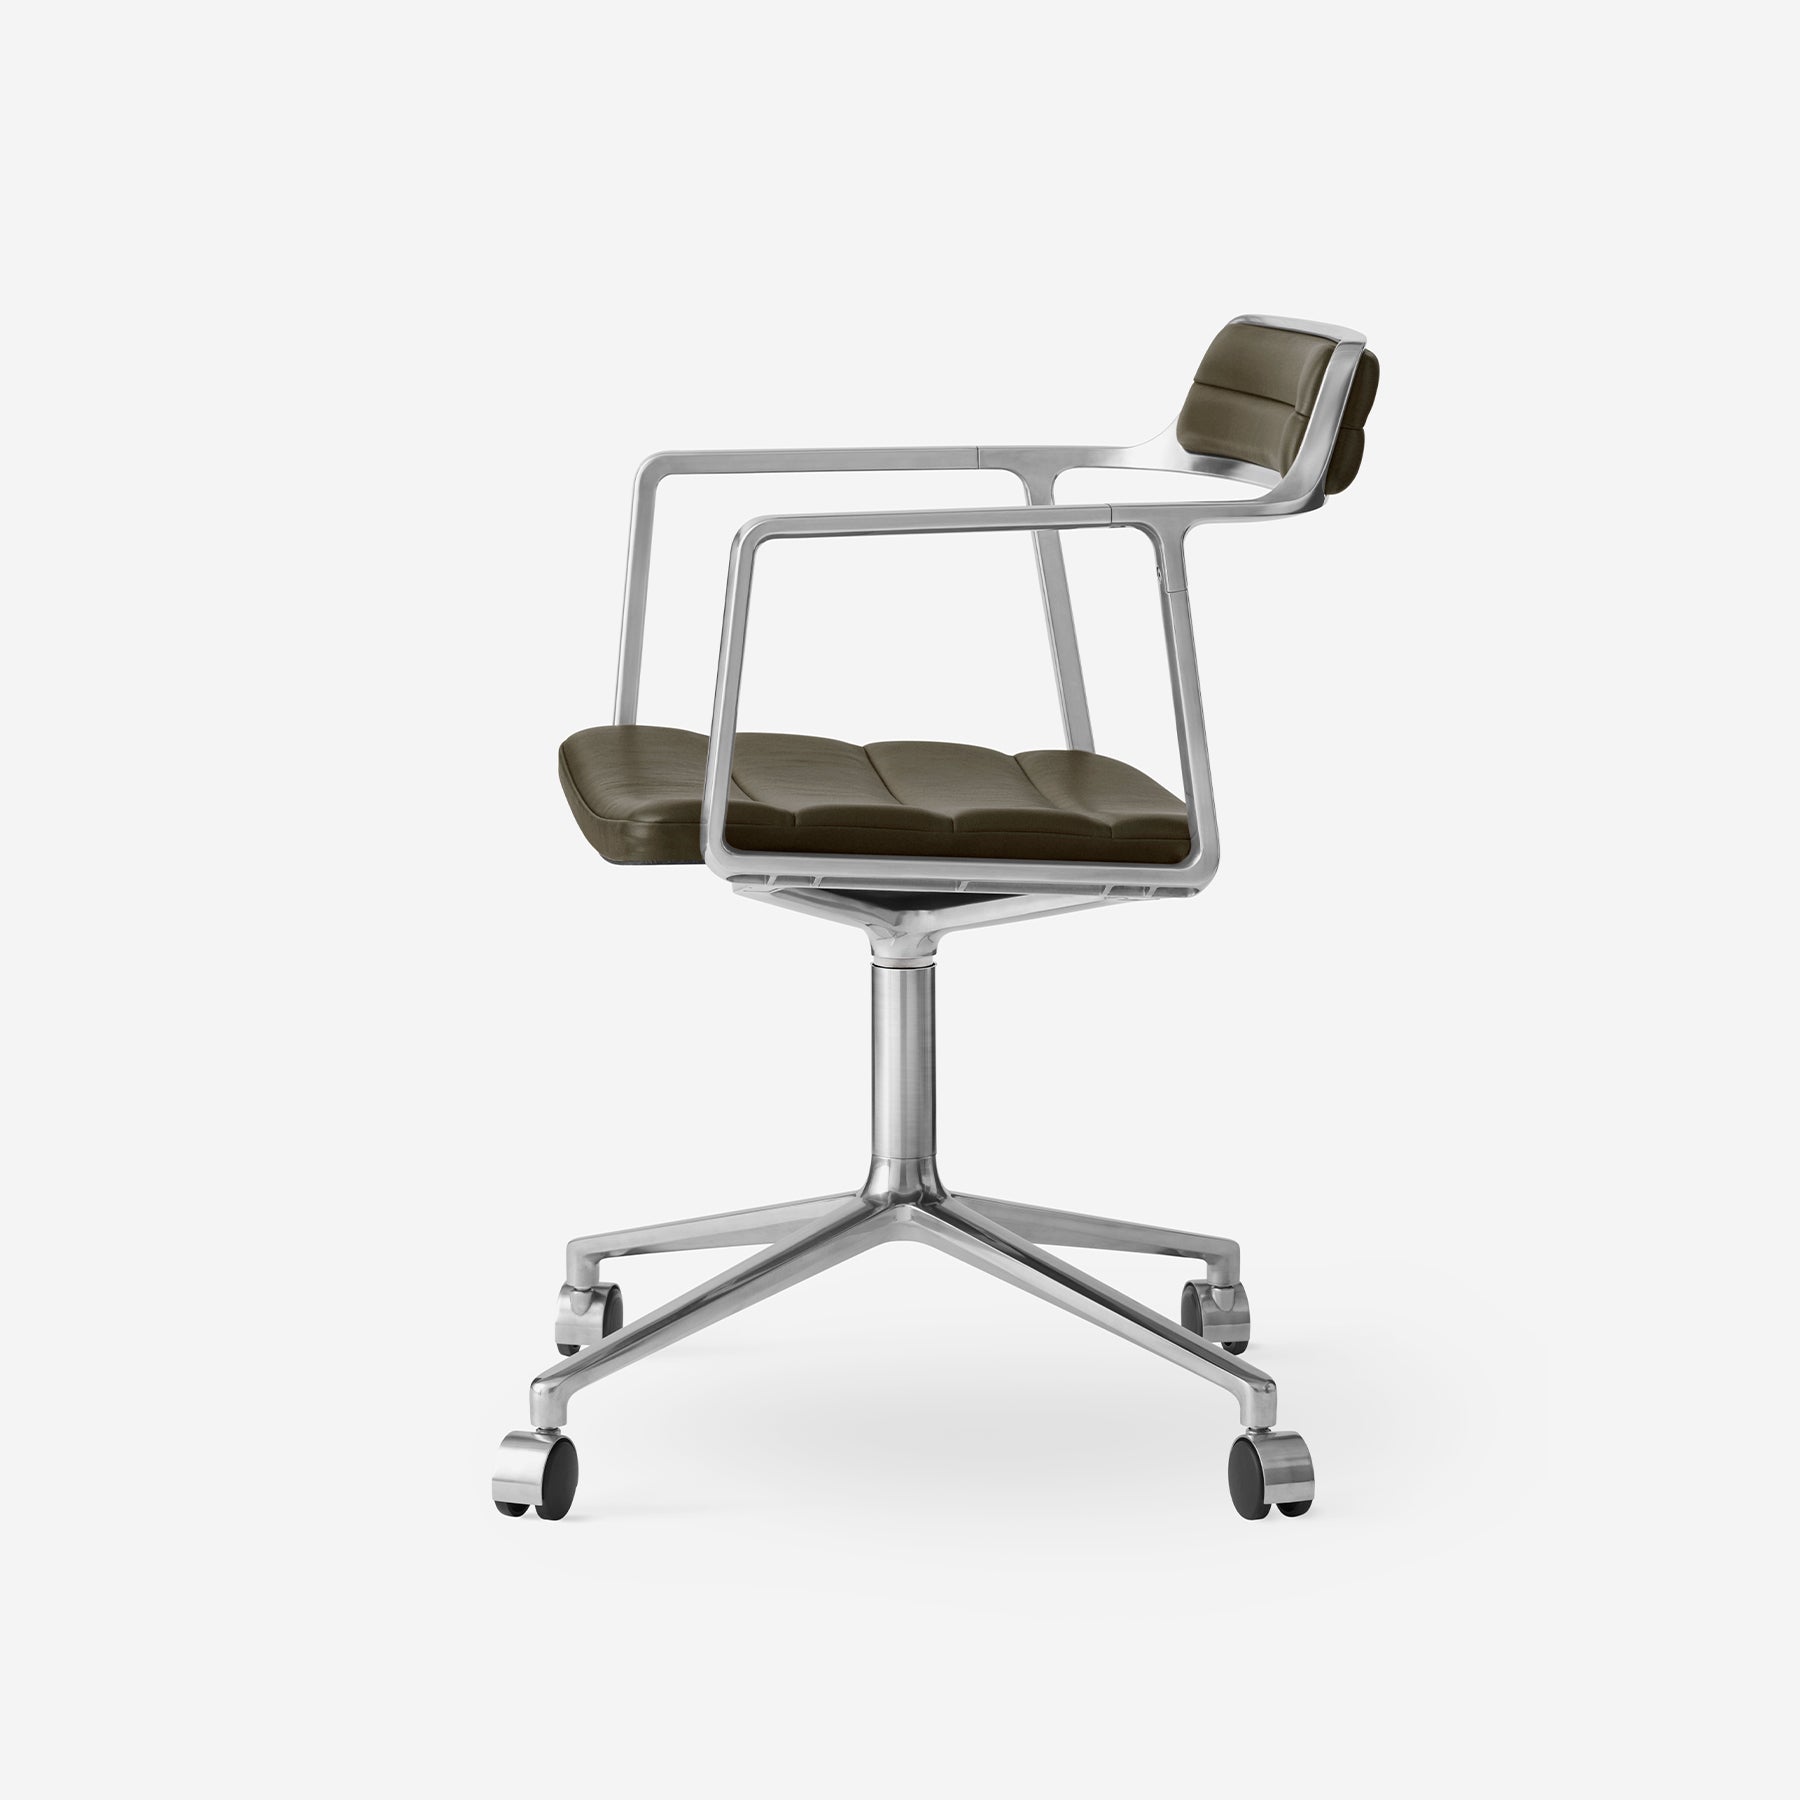 VIPP452 Swivel chair w/ castors, Polished Aluminium